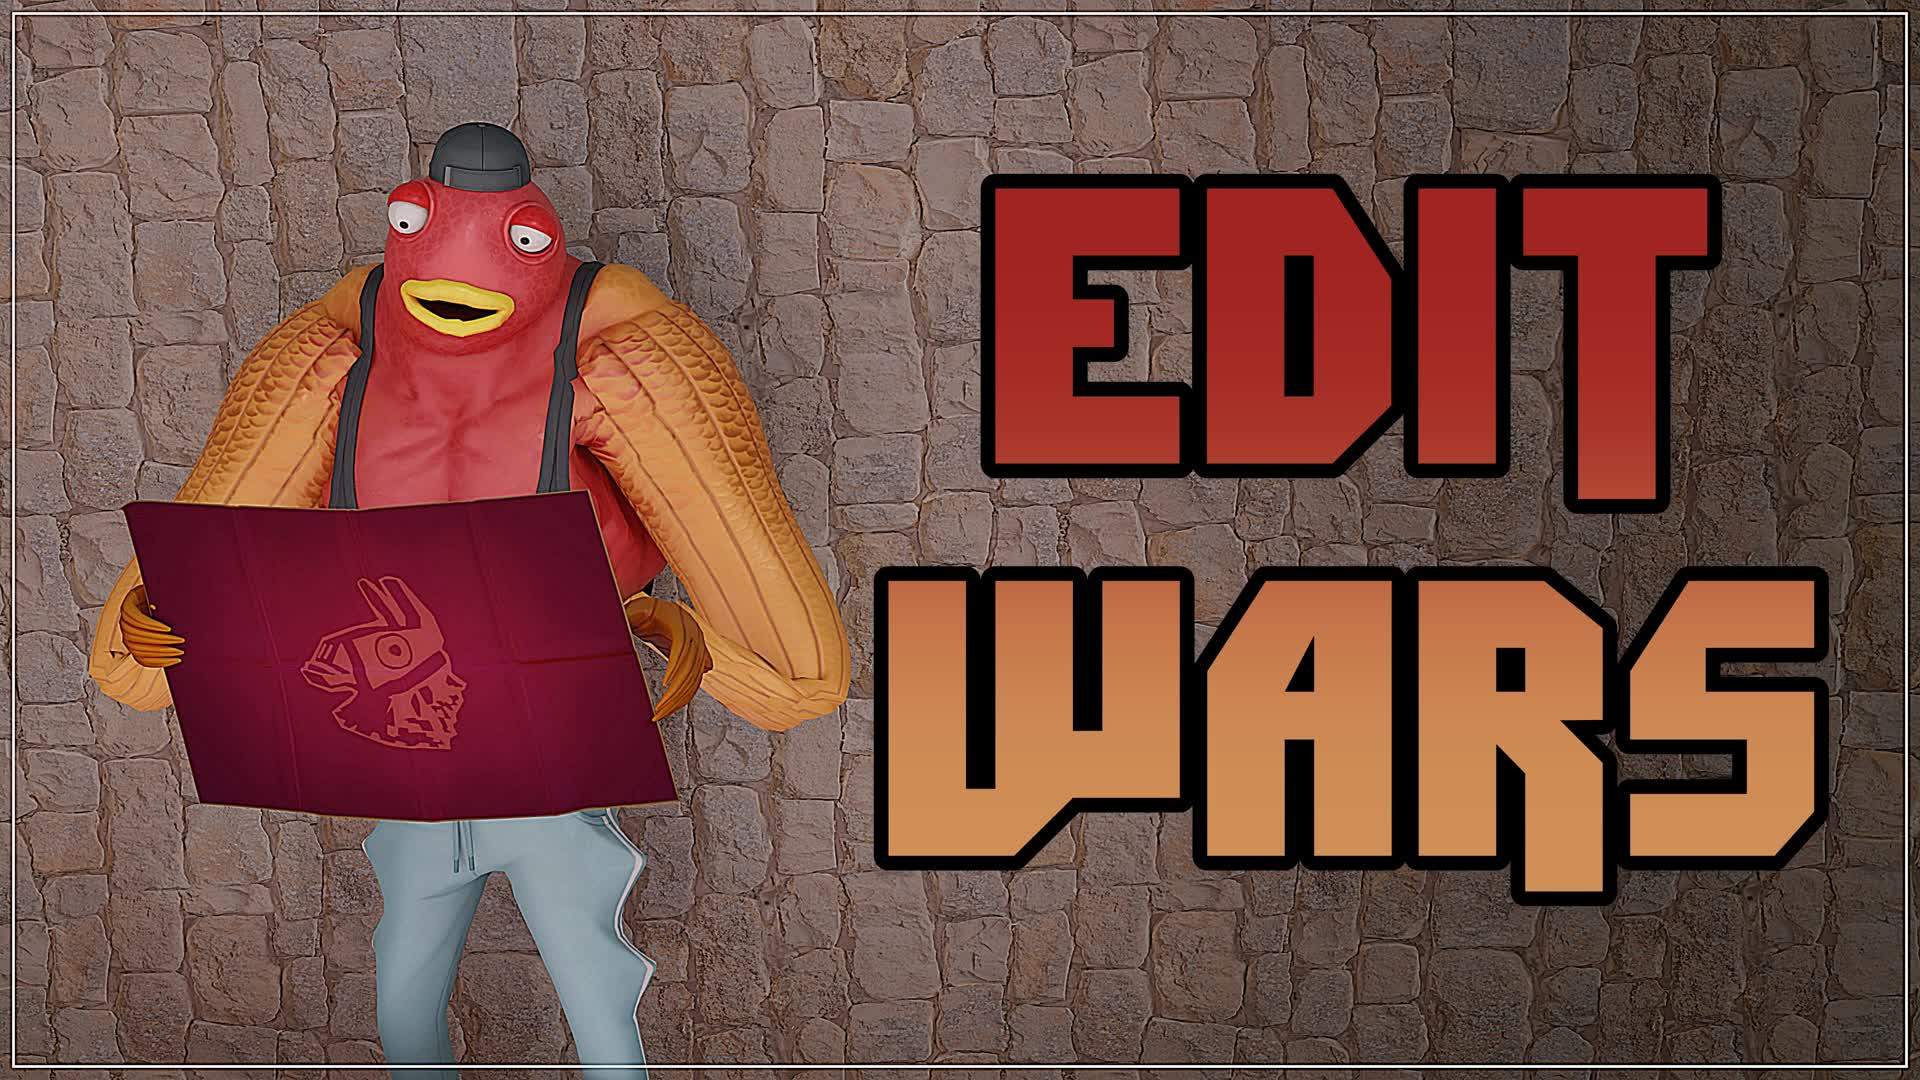 Edit Wars 2.0